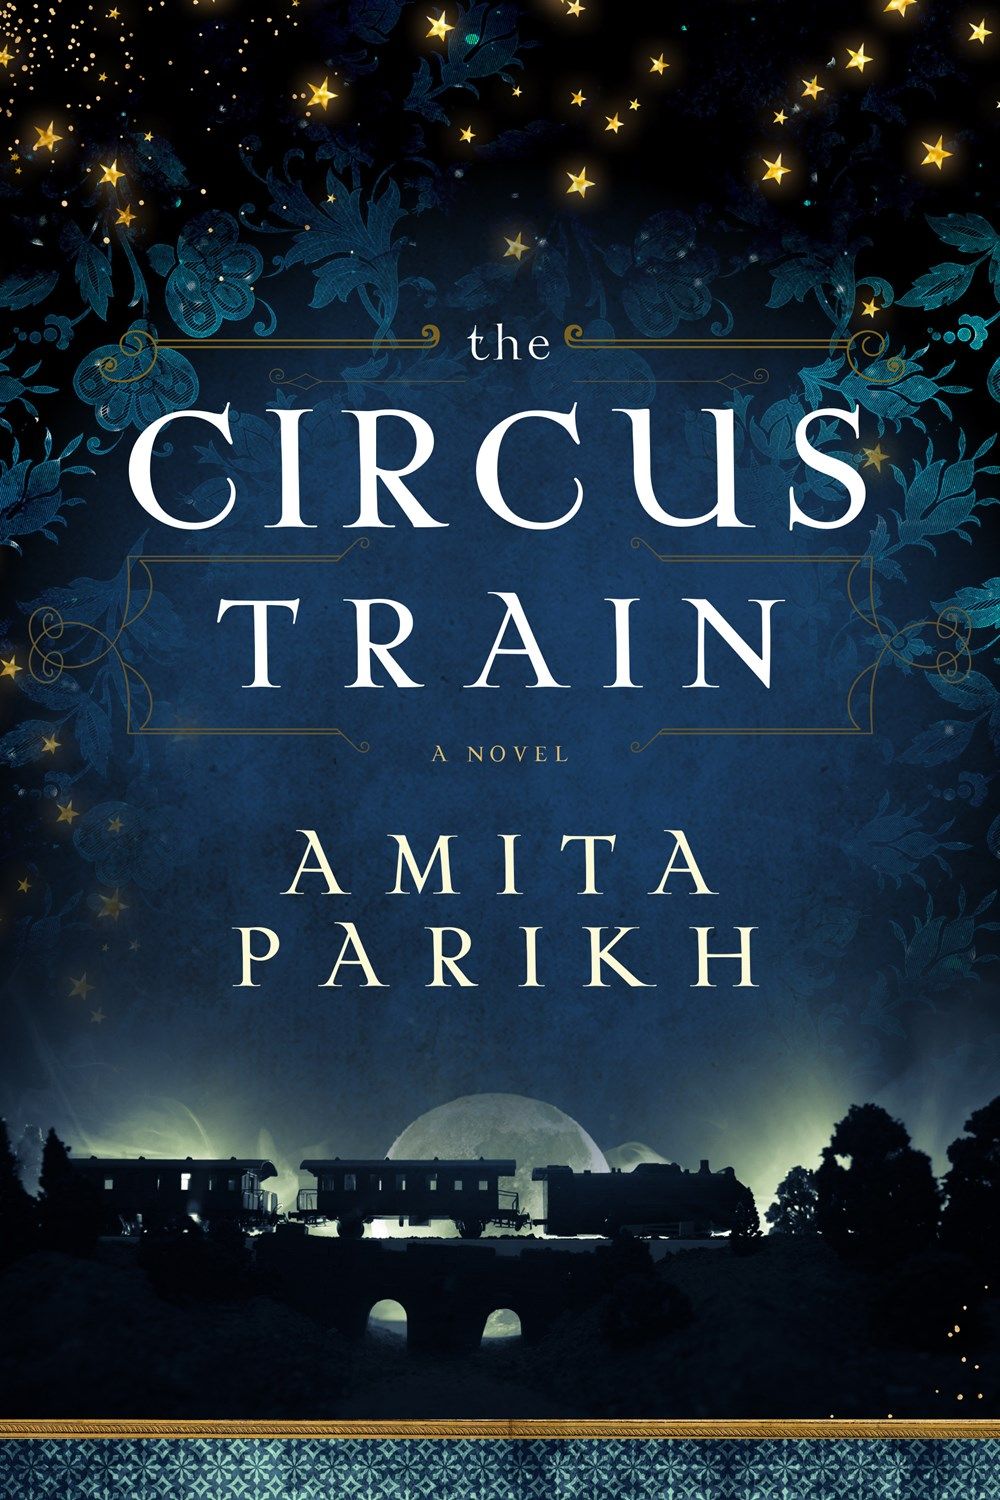 Cover image of "The Circus Train" by Amita Parikh.